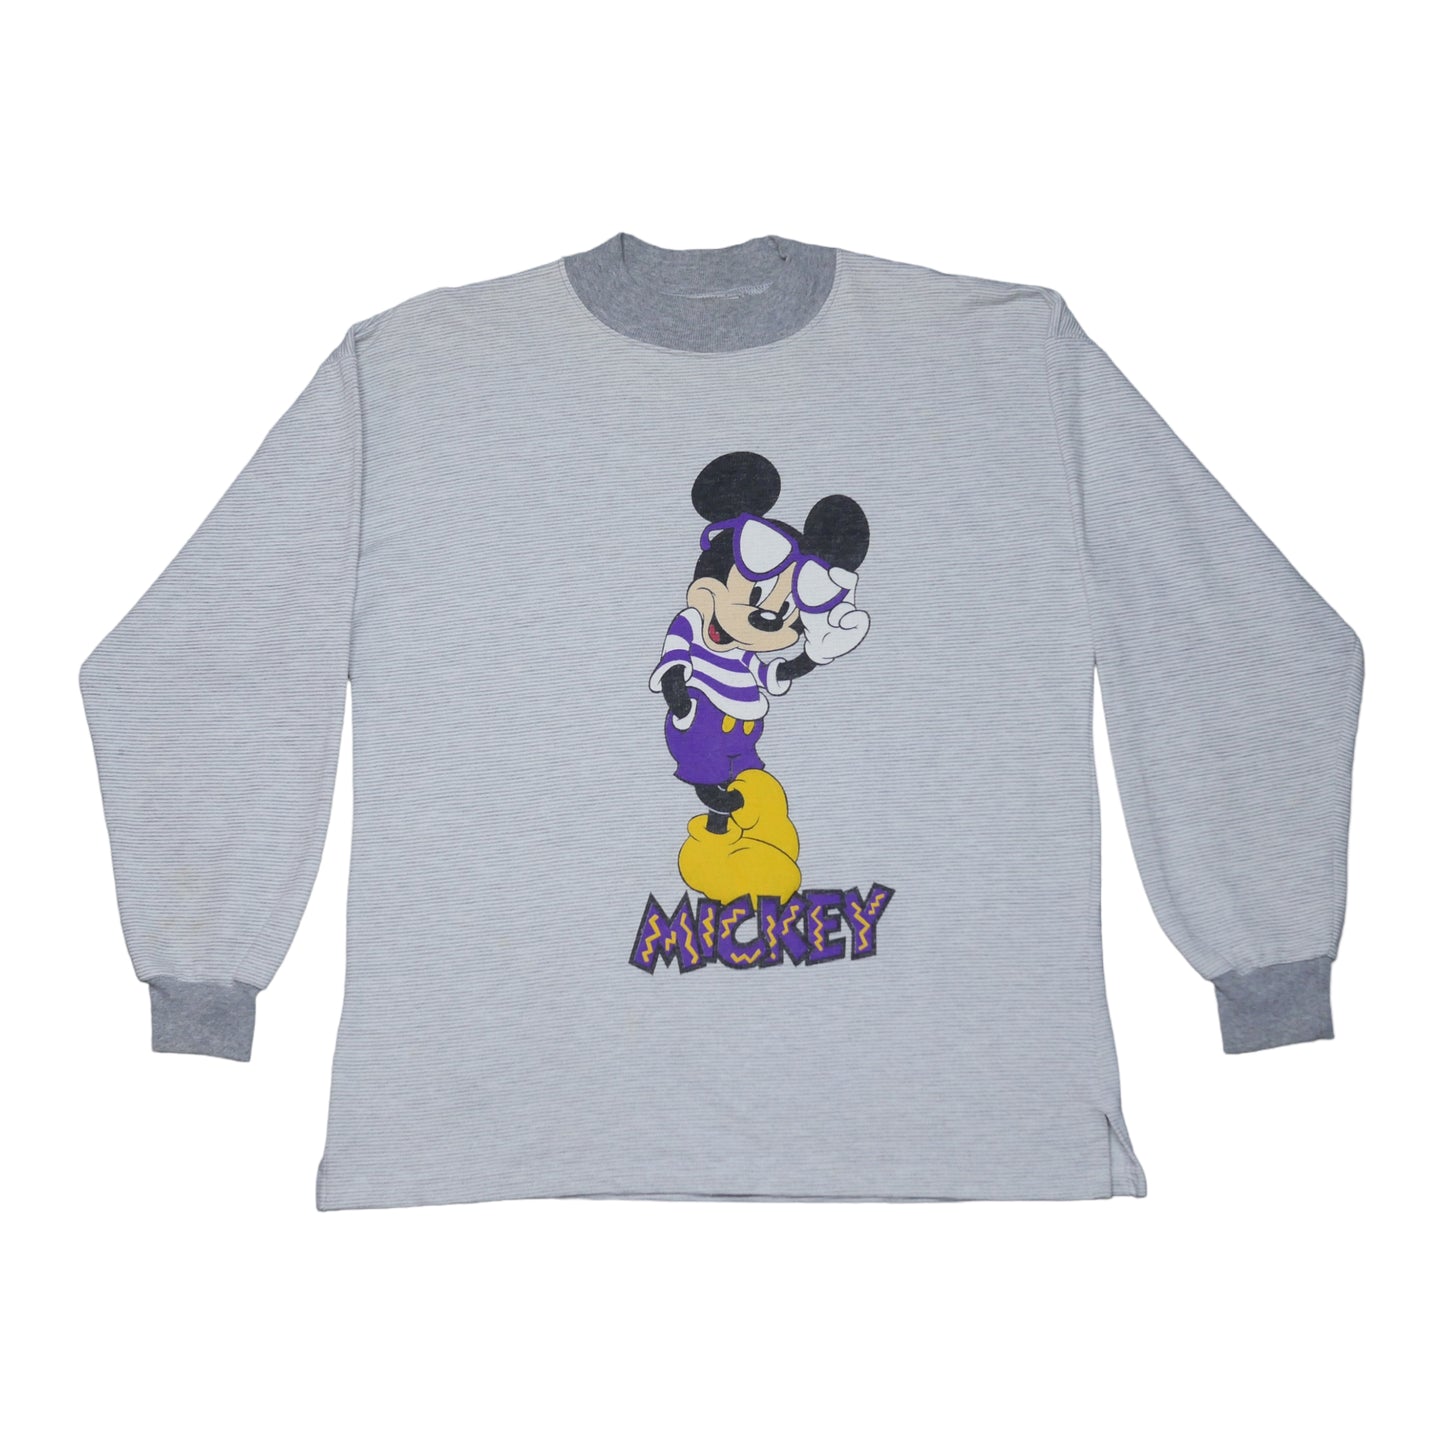 Disney Fashions Mickey Mouse Shirt - Large